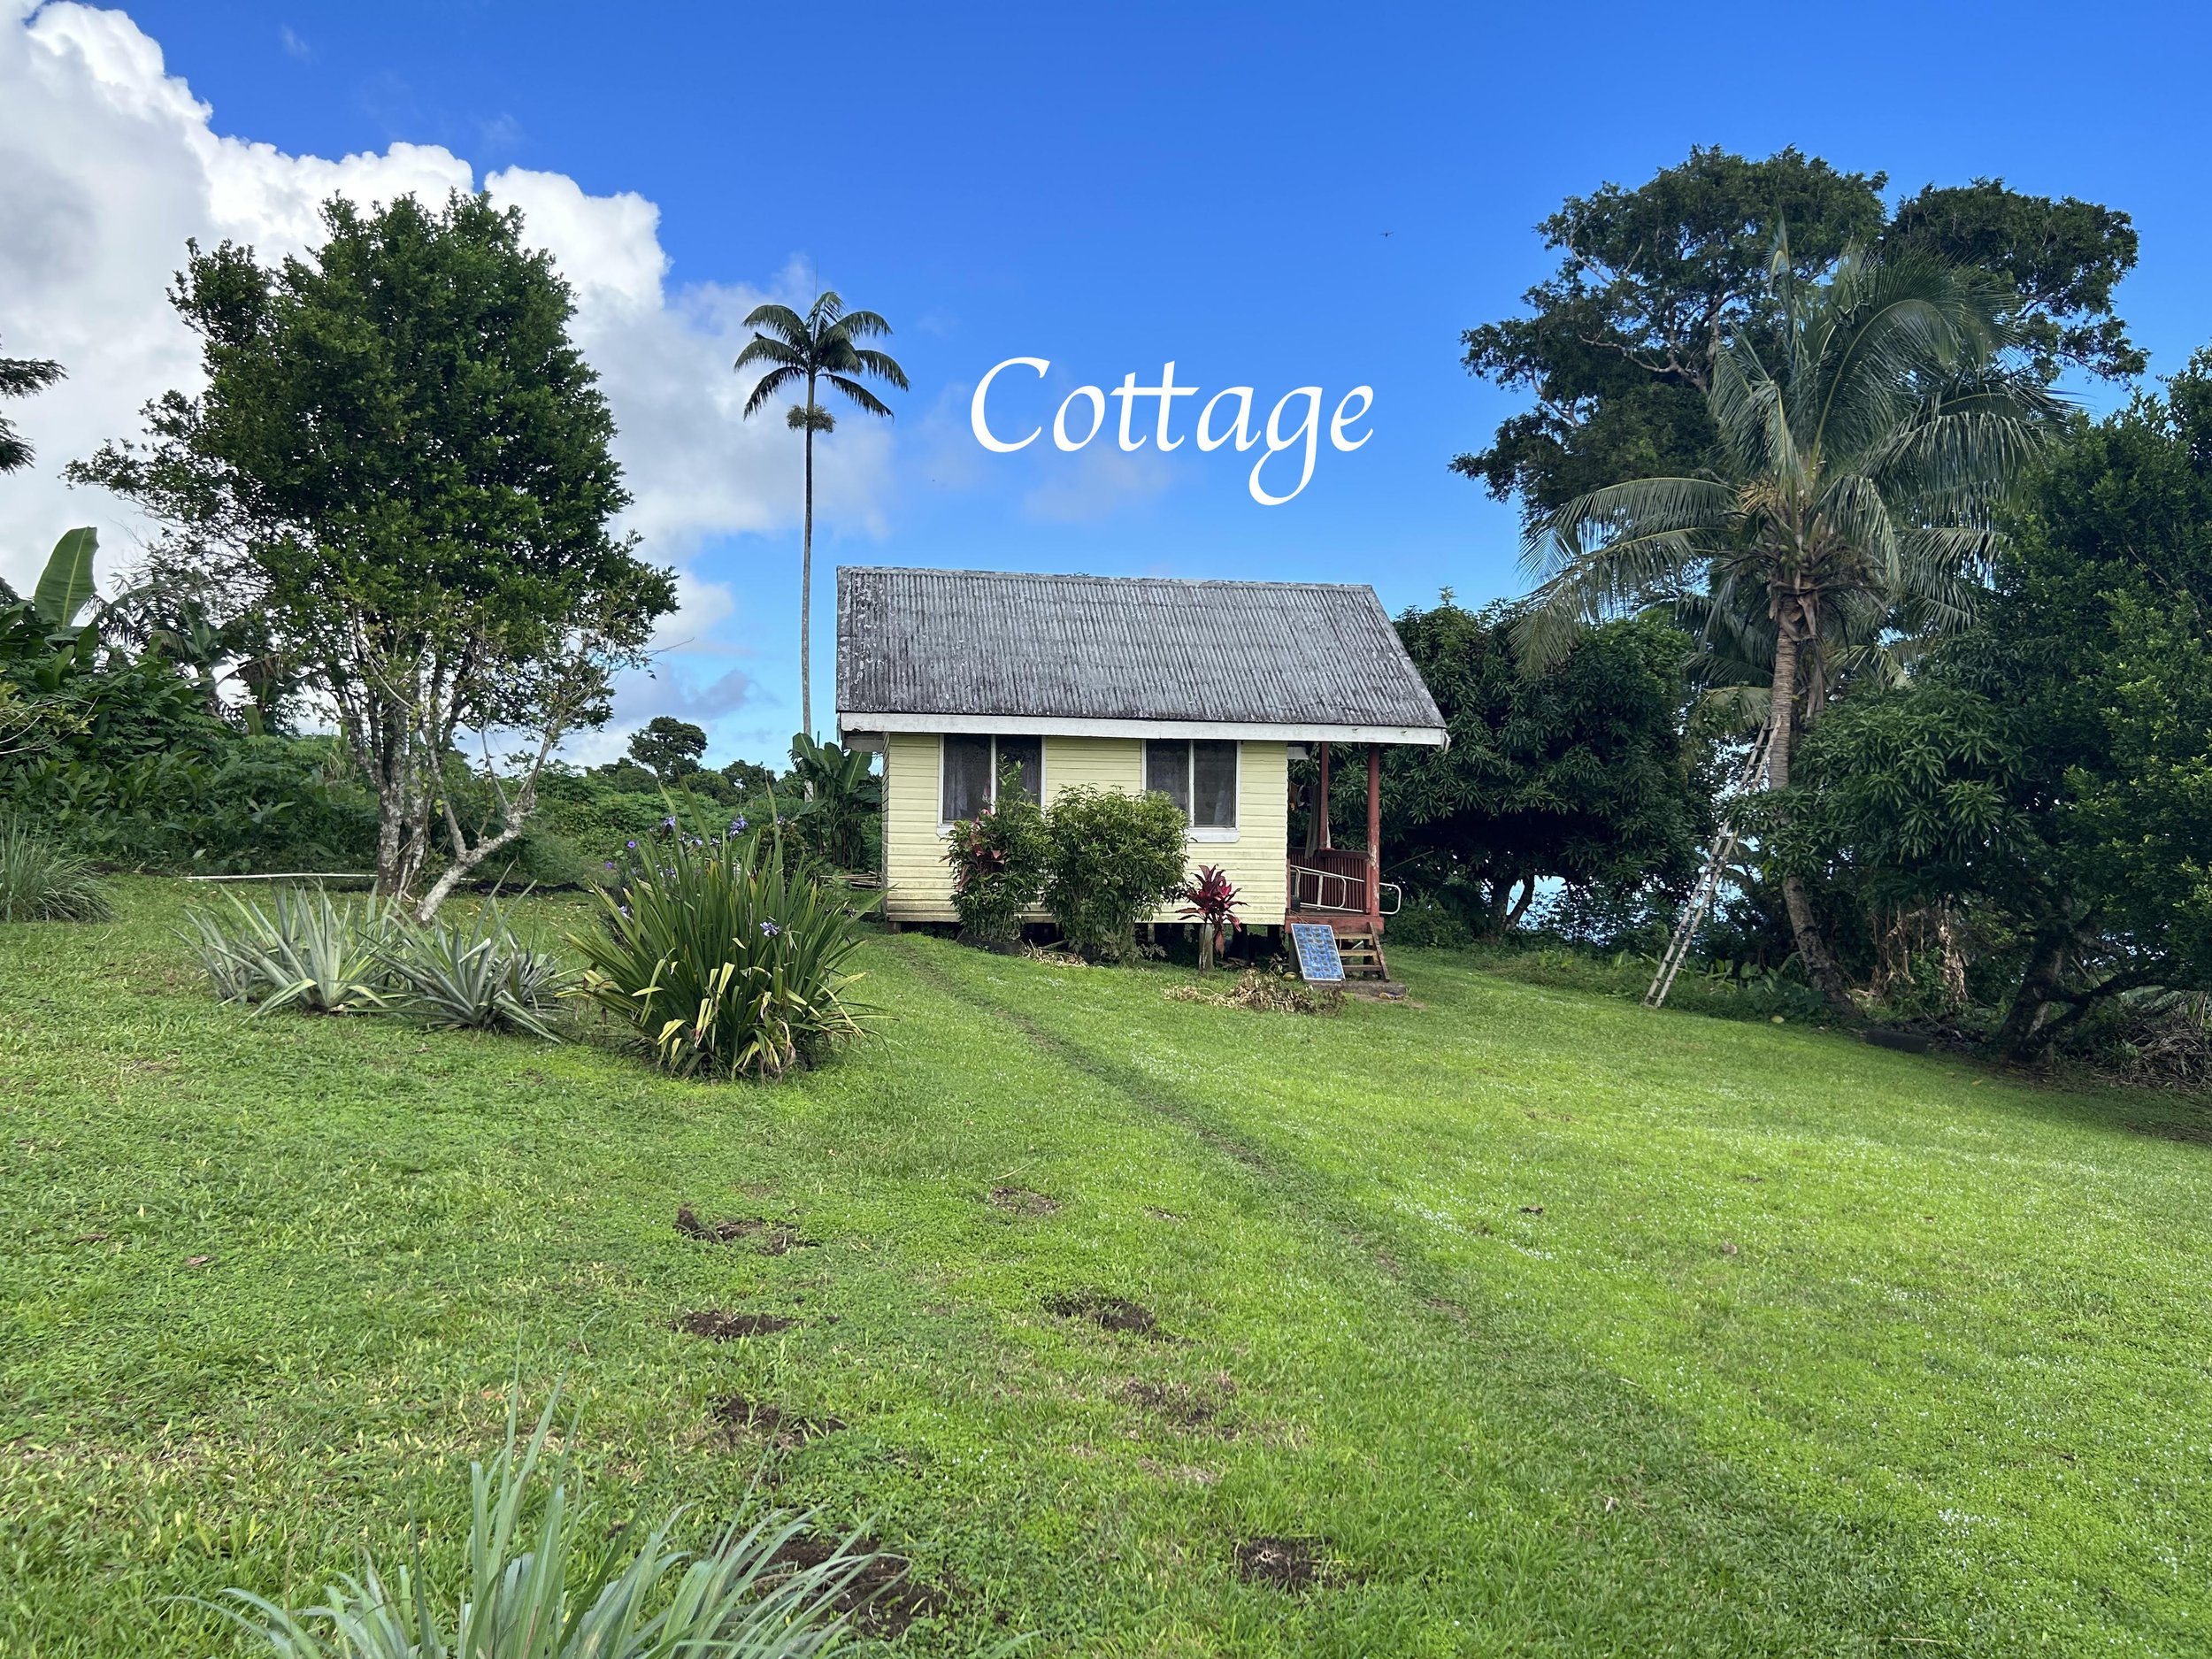 Cottage.jpg